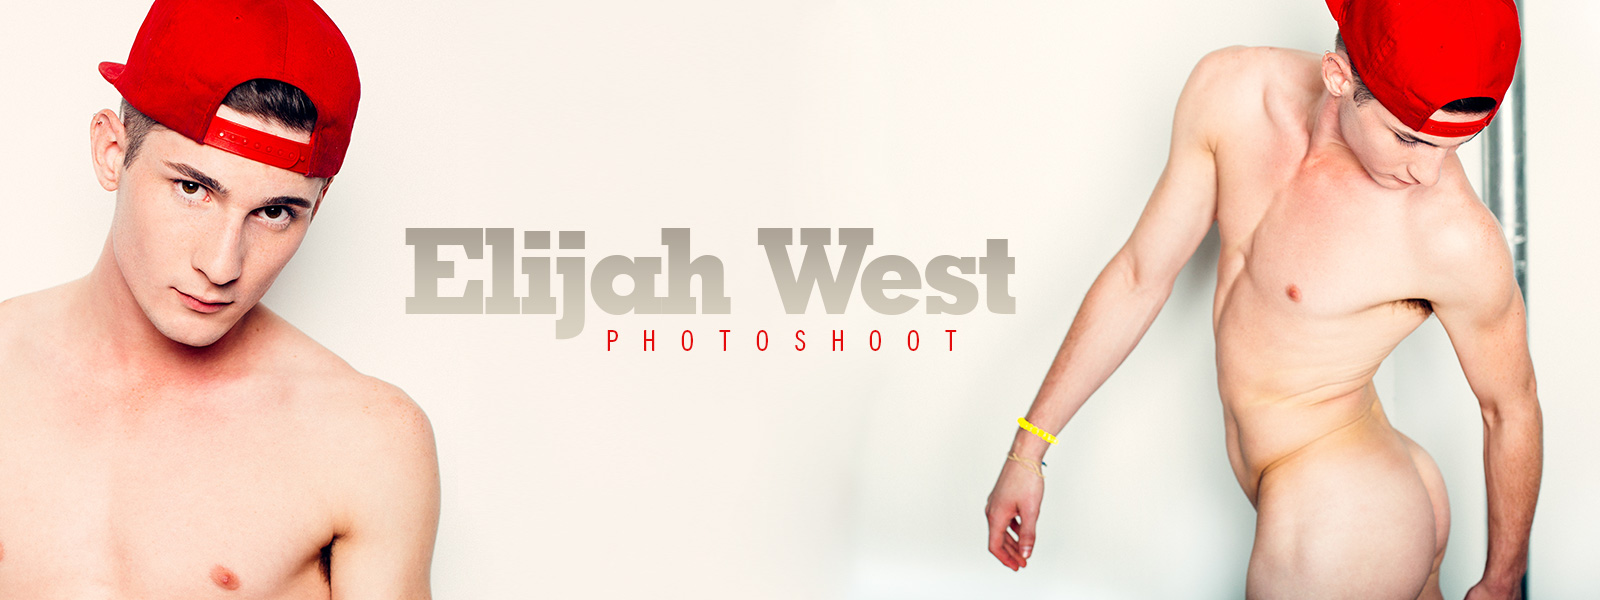 Elijah West Photoshoot